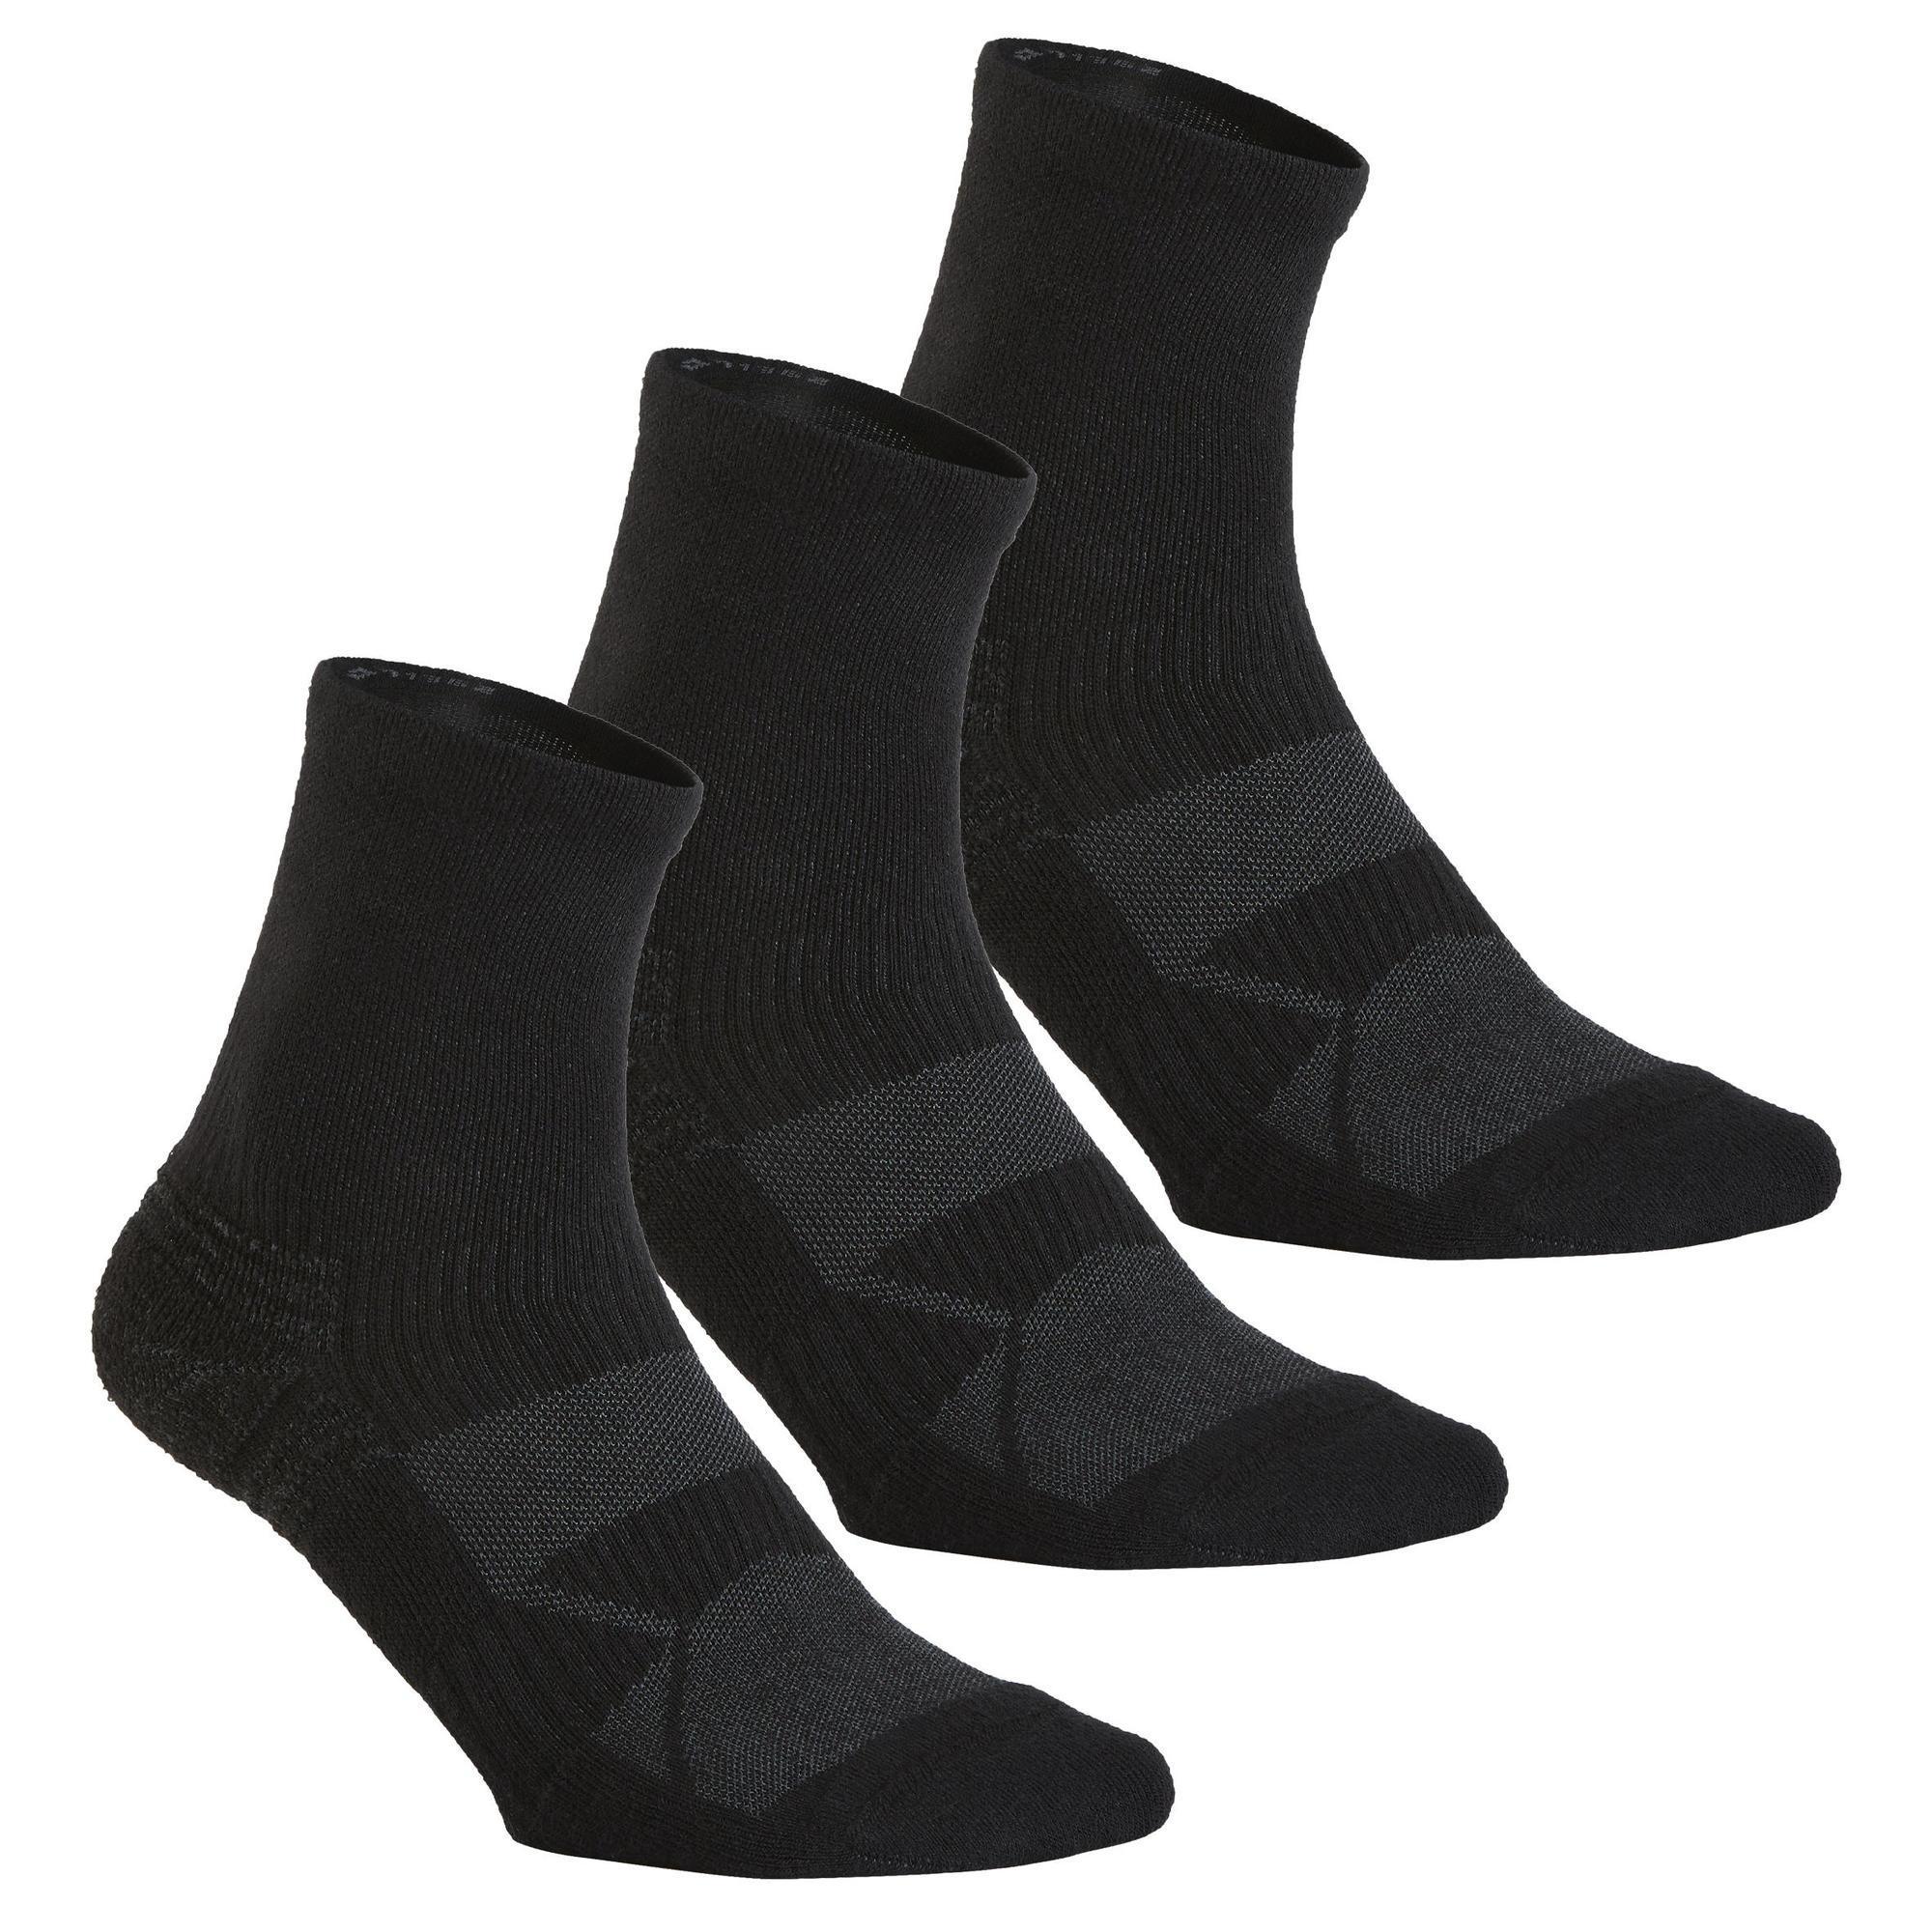 Lasting Sportsocke Nordic Walking Socke NWB Damen Herren Kinder Gr M 27031841 